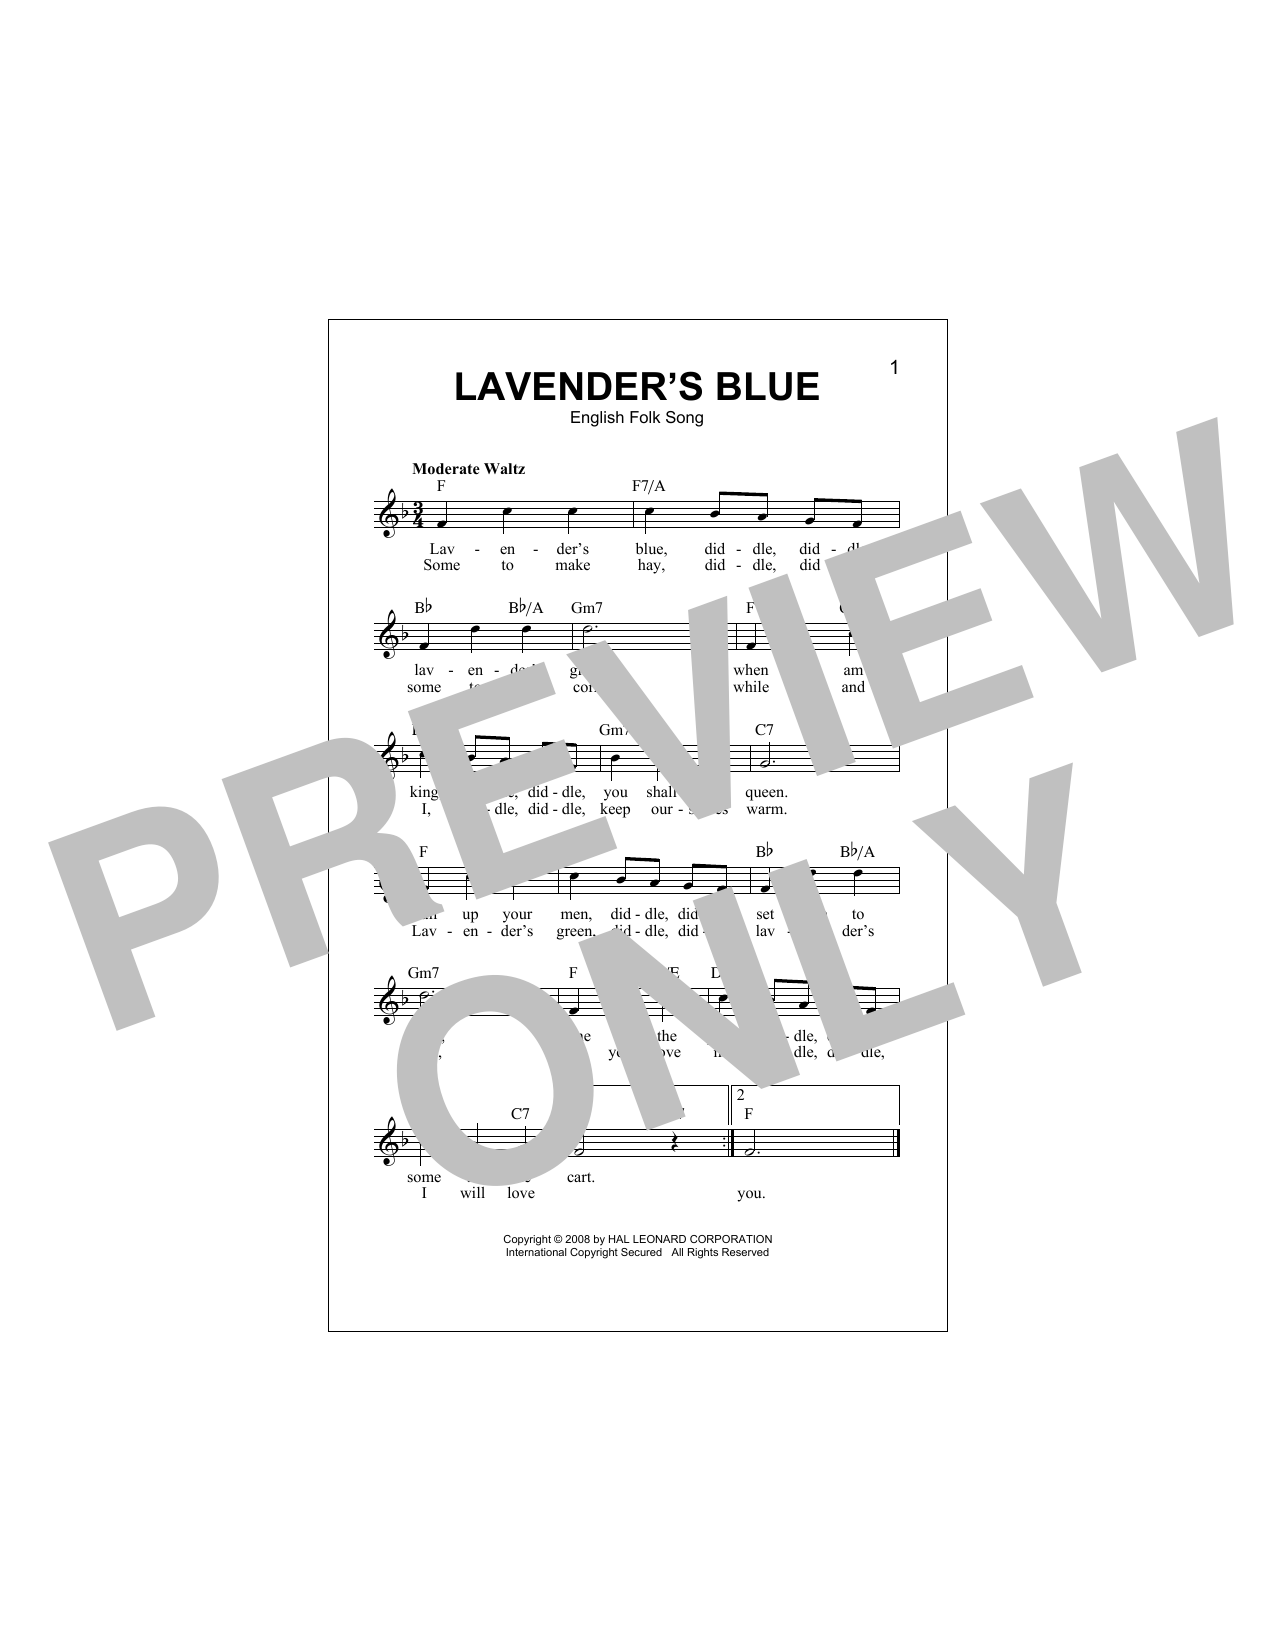 Download English Folk Song Lavender's Blue Sheet Music